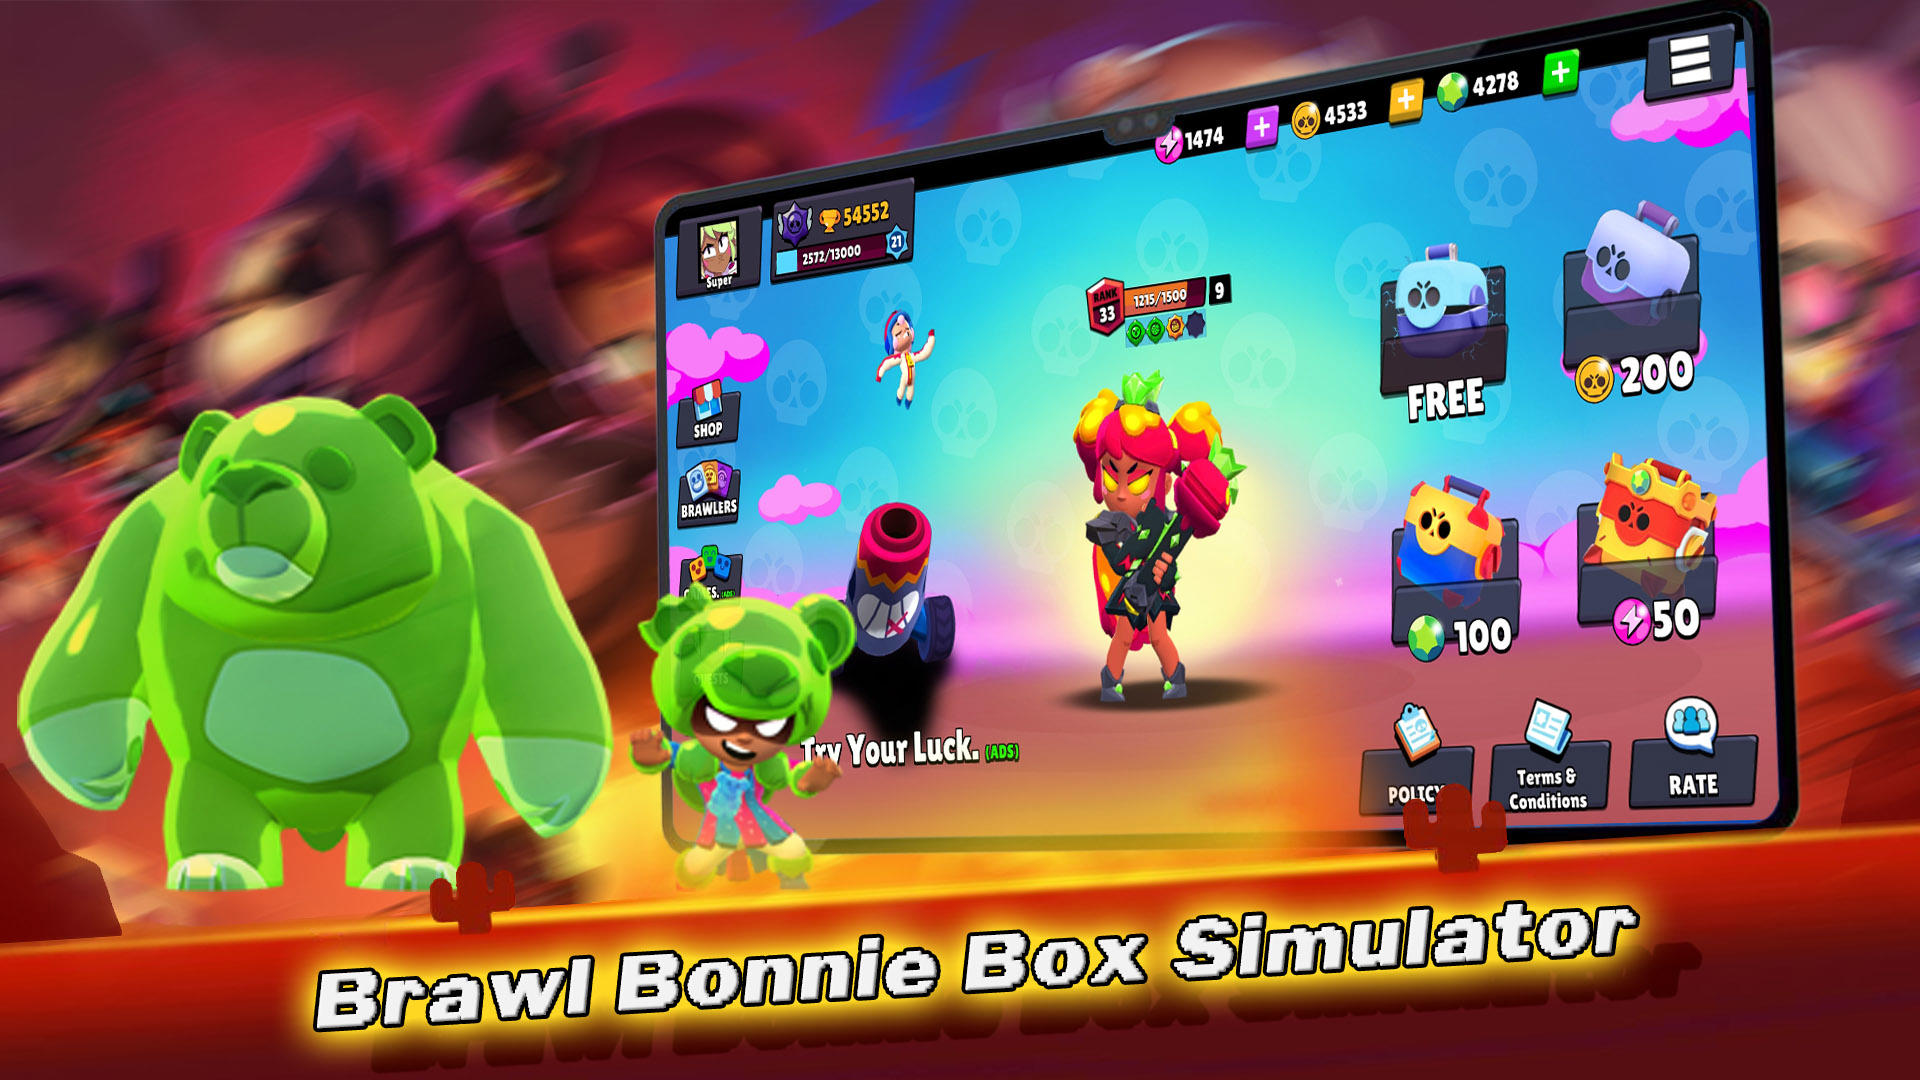 Brawl stars Bonnie simulator screenshot game